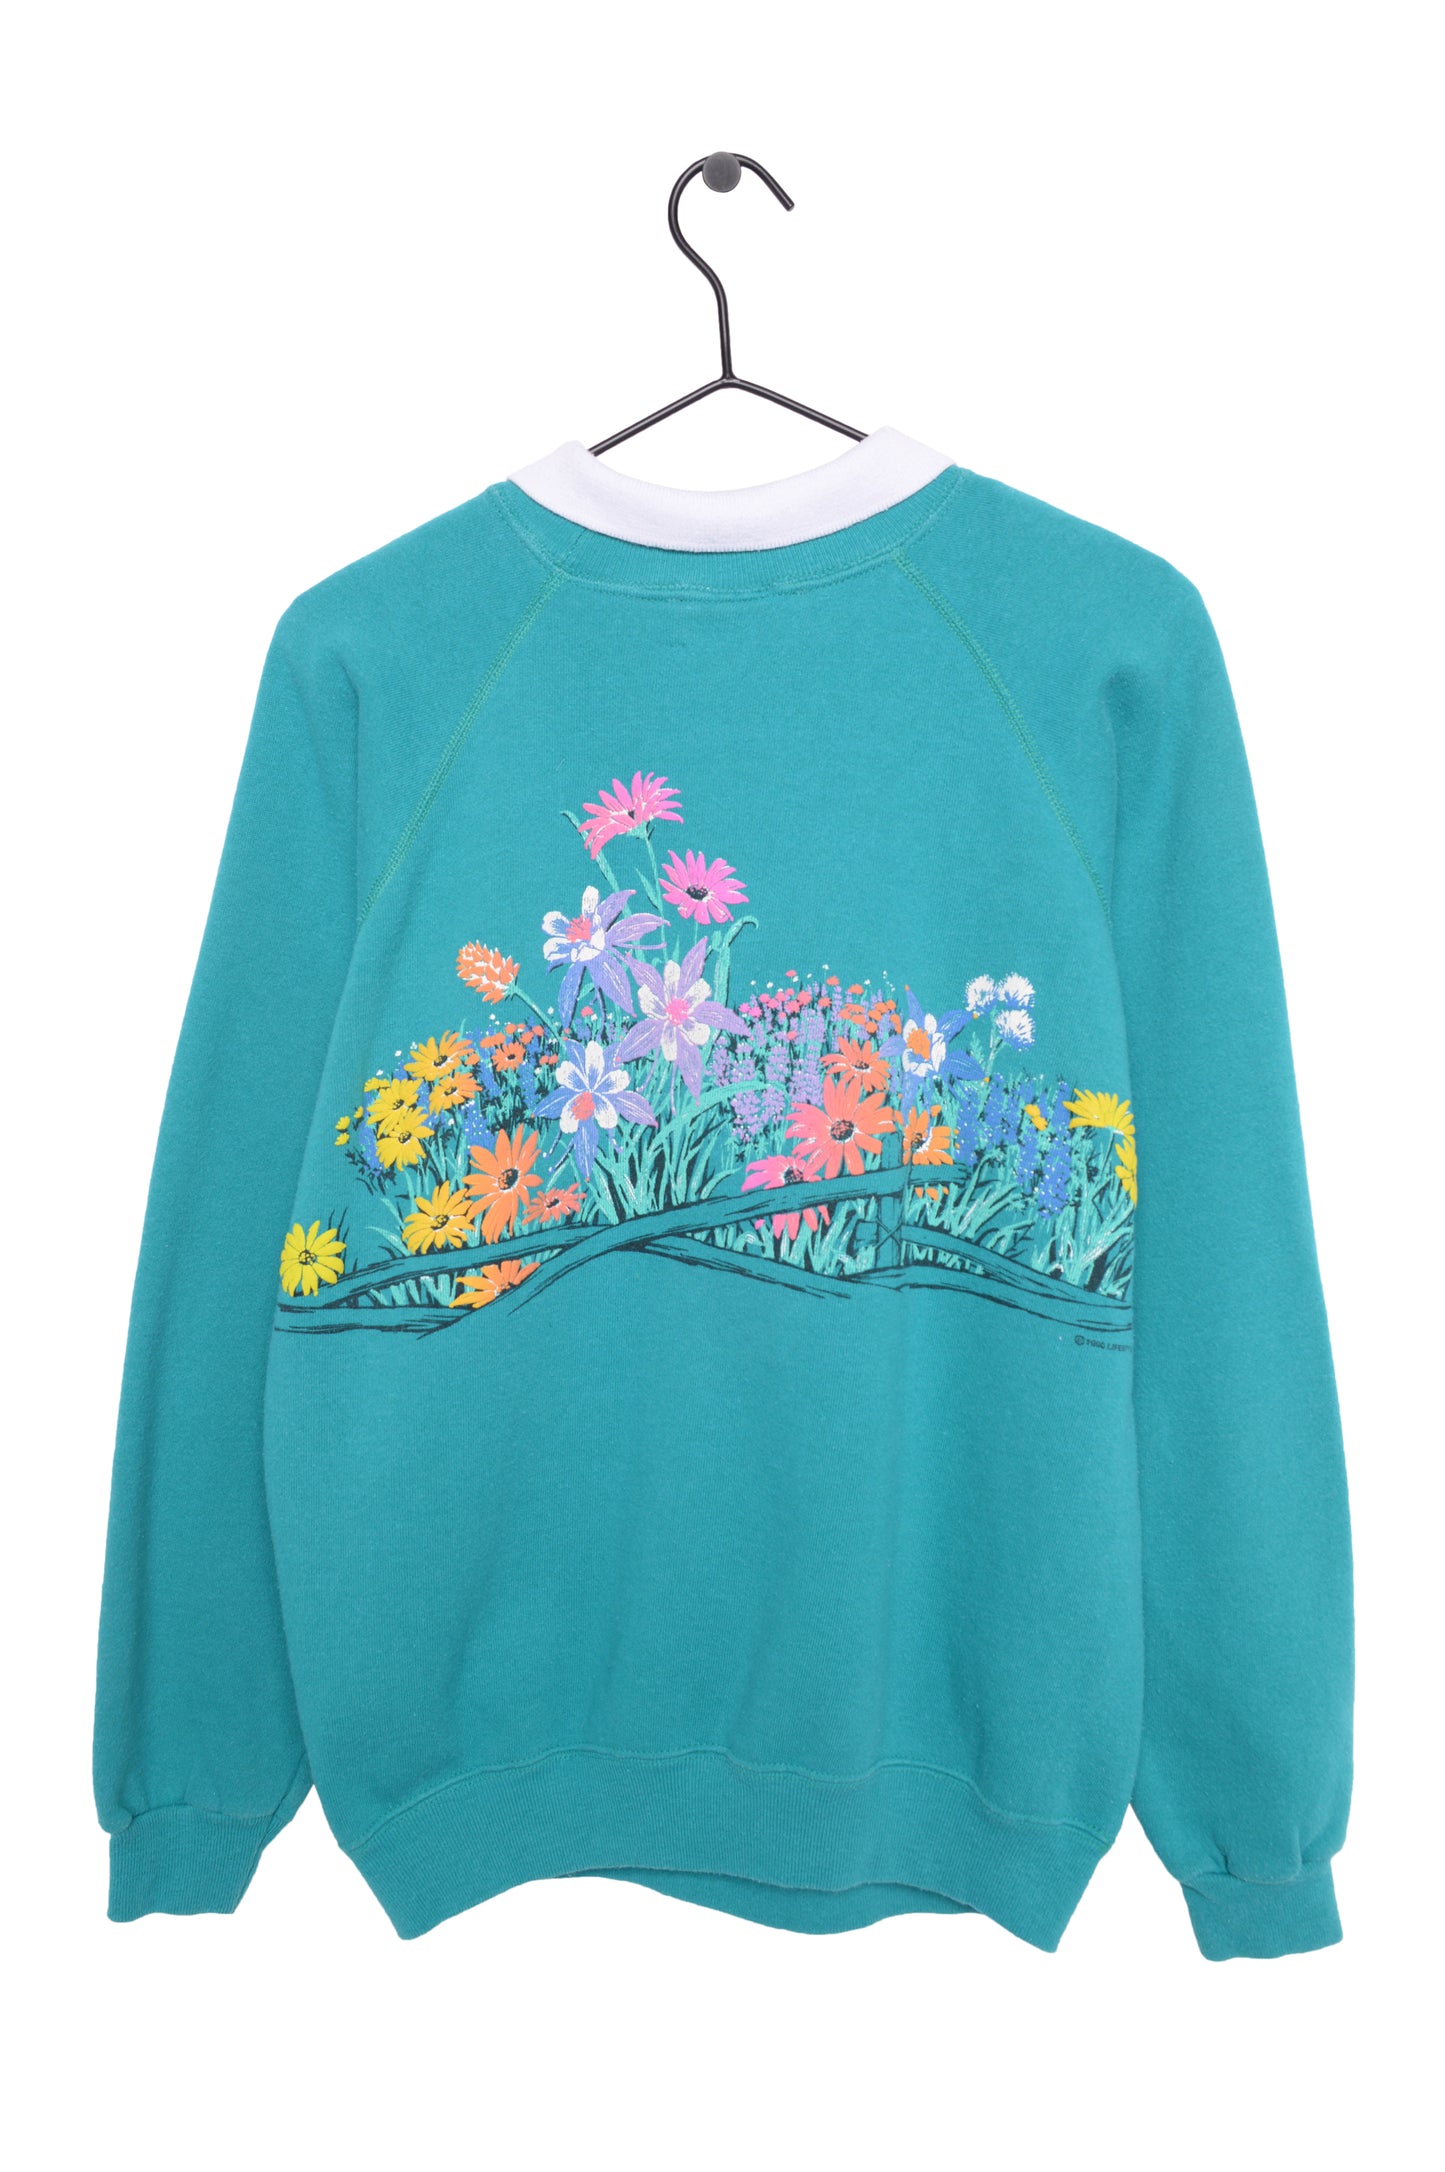 1990 Lace Placid Collared Sweatshirt USA